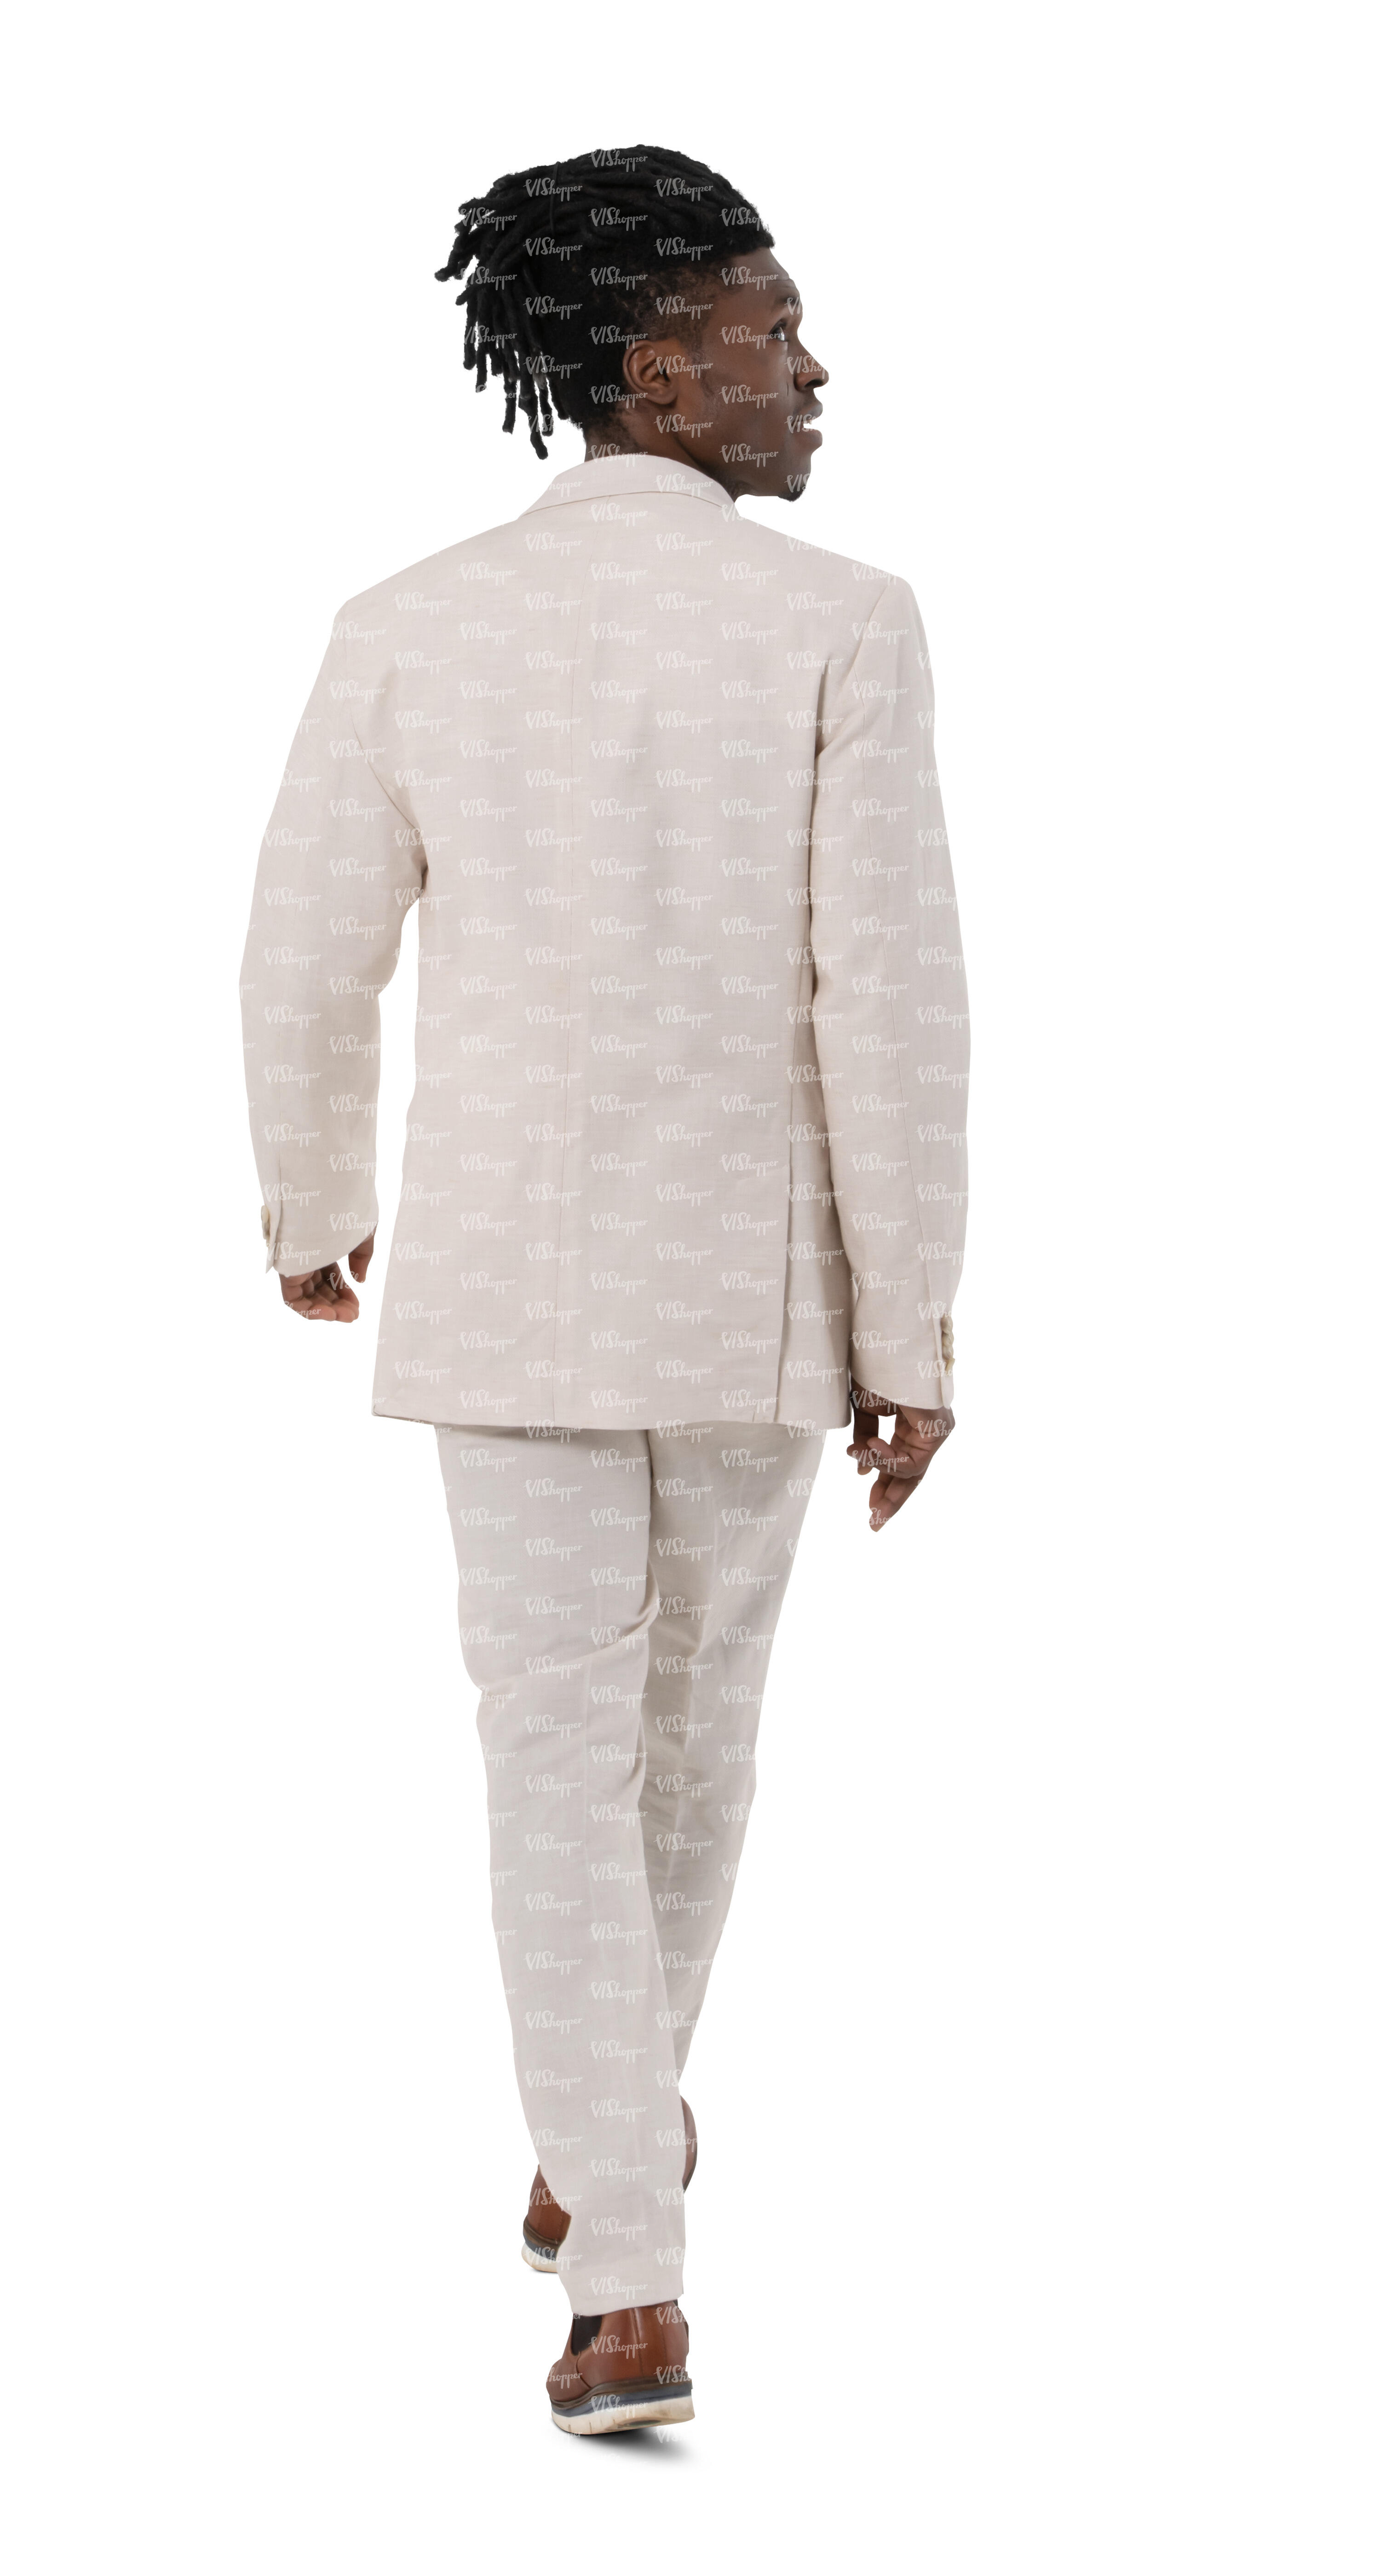 cut out black man in a white suit walking - VIShopper